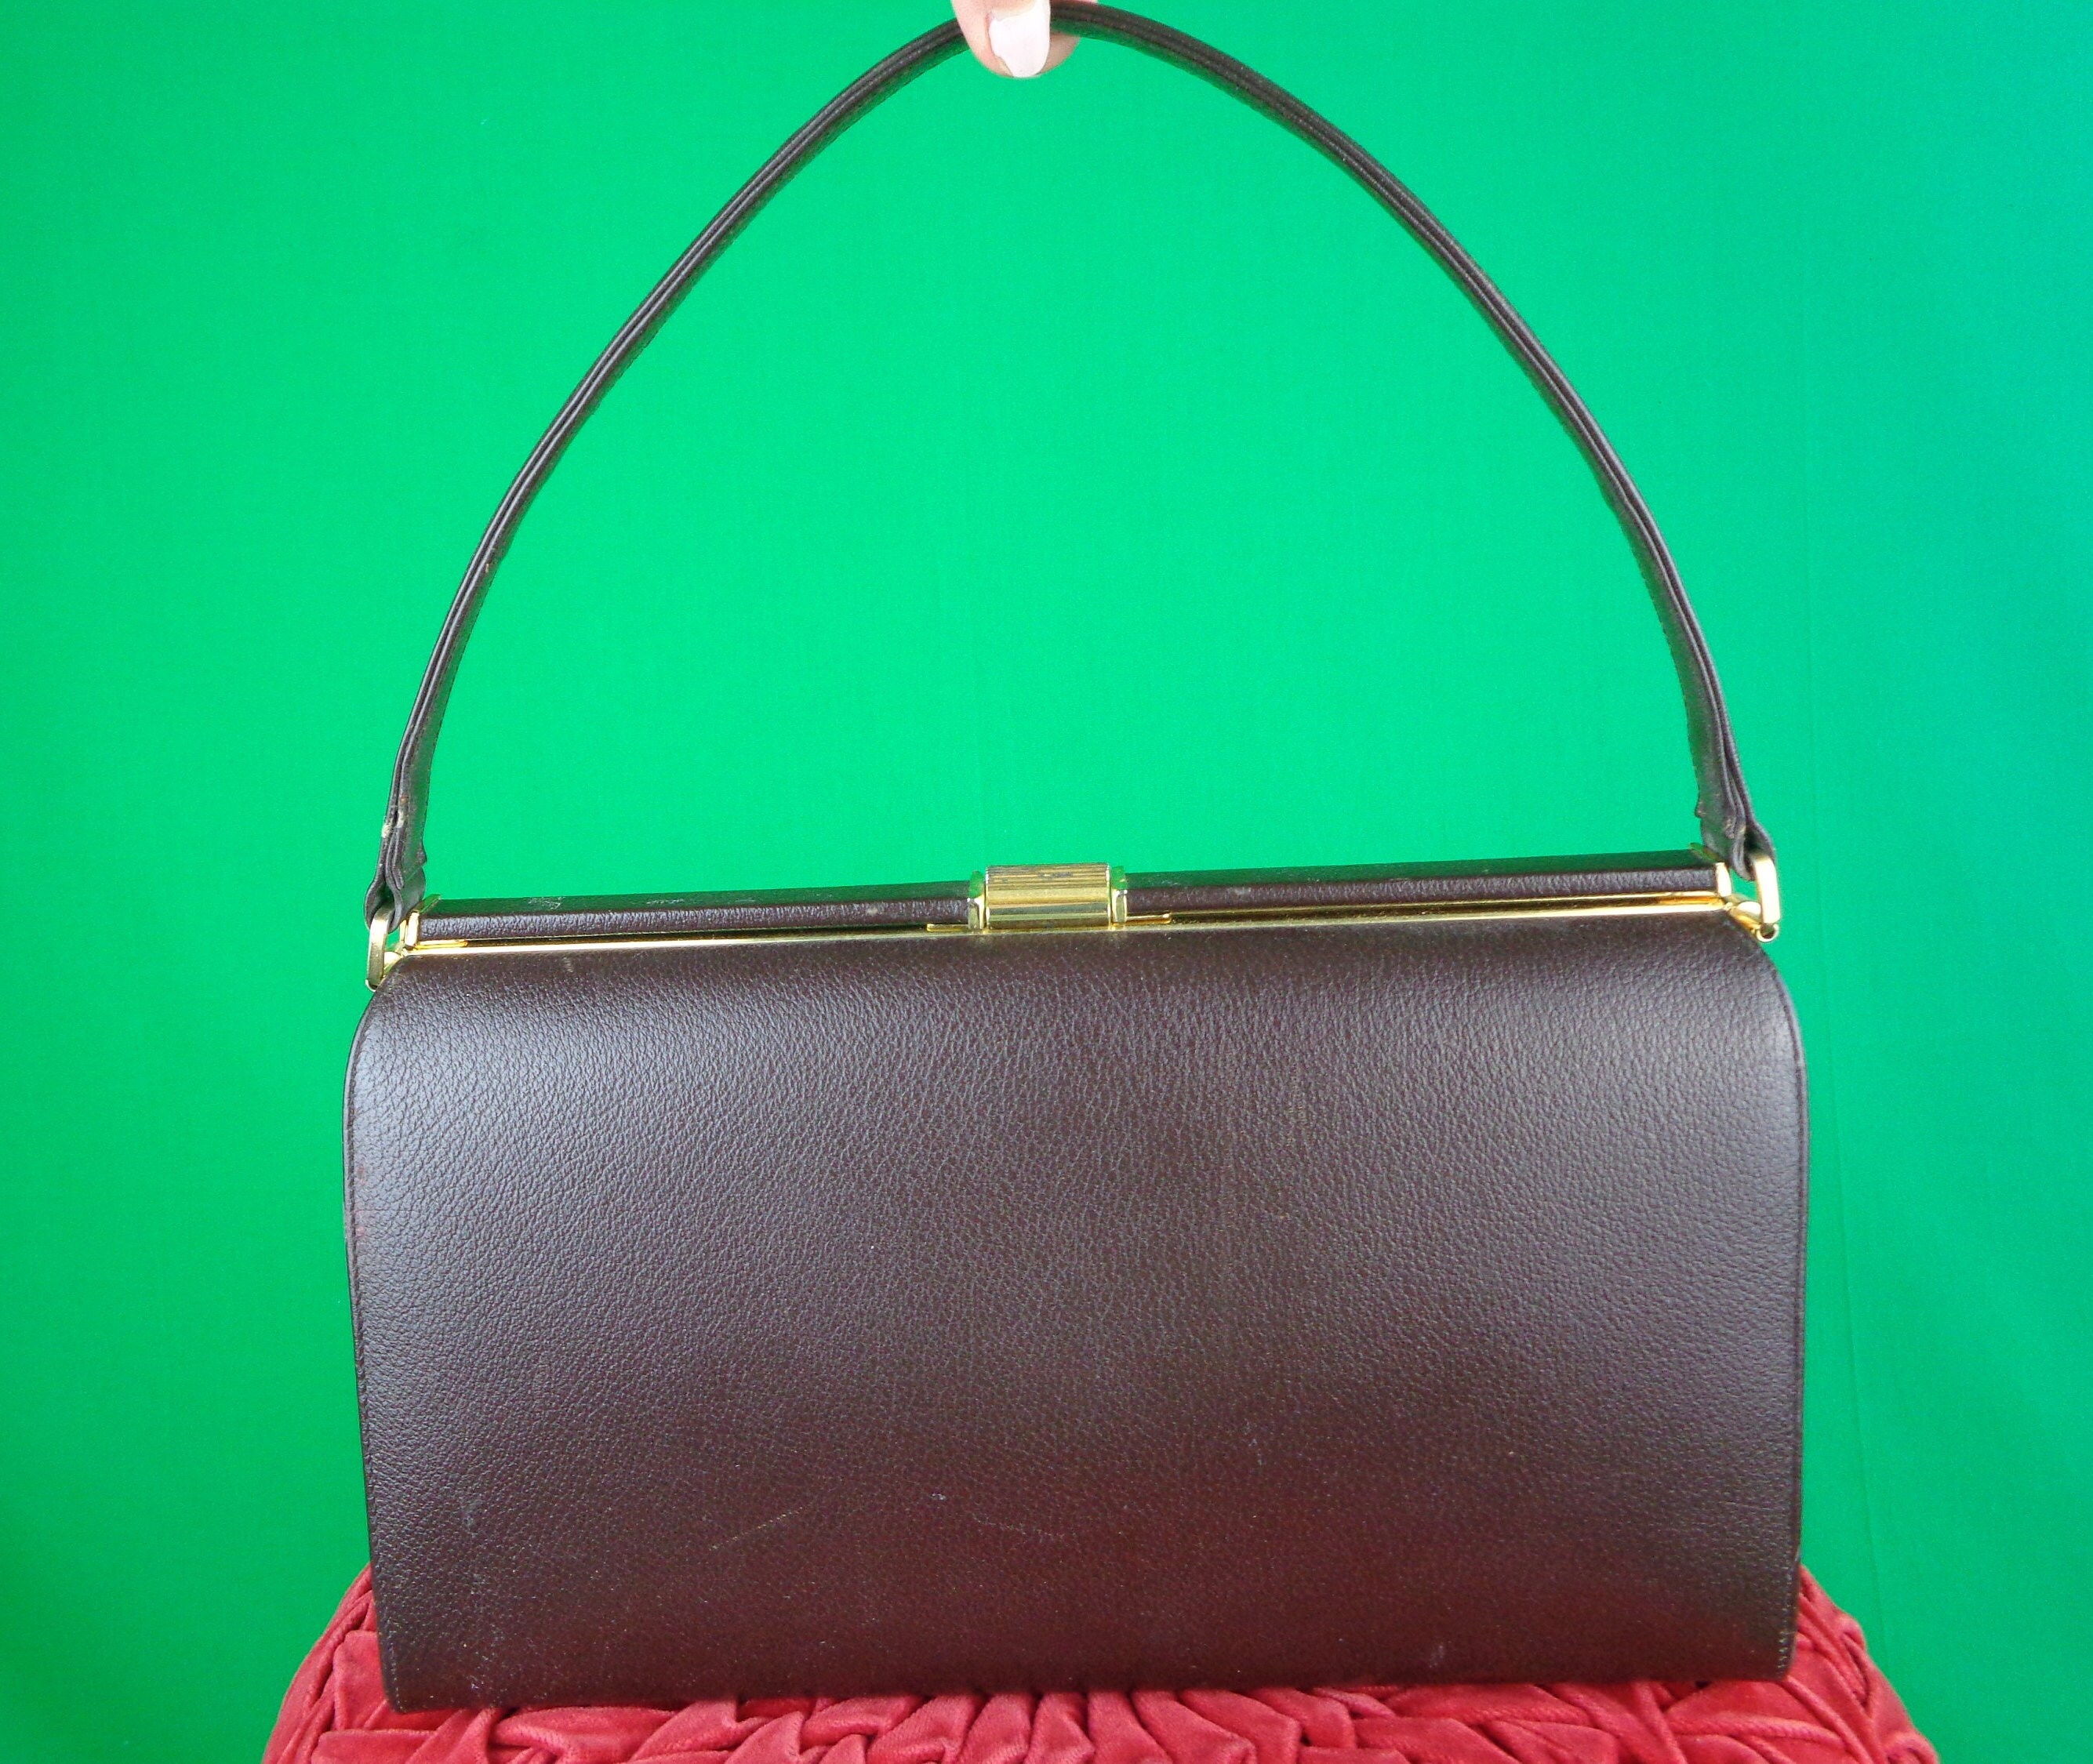 Vintage 1940s Handbag Box Purse